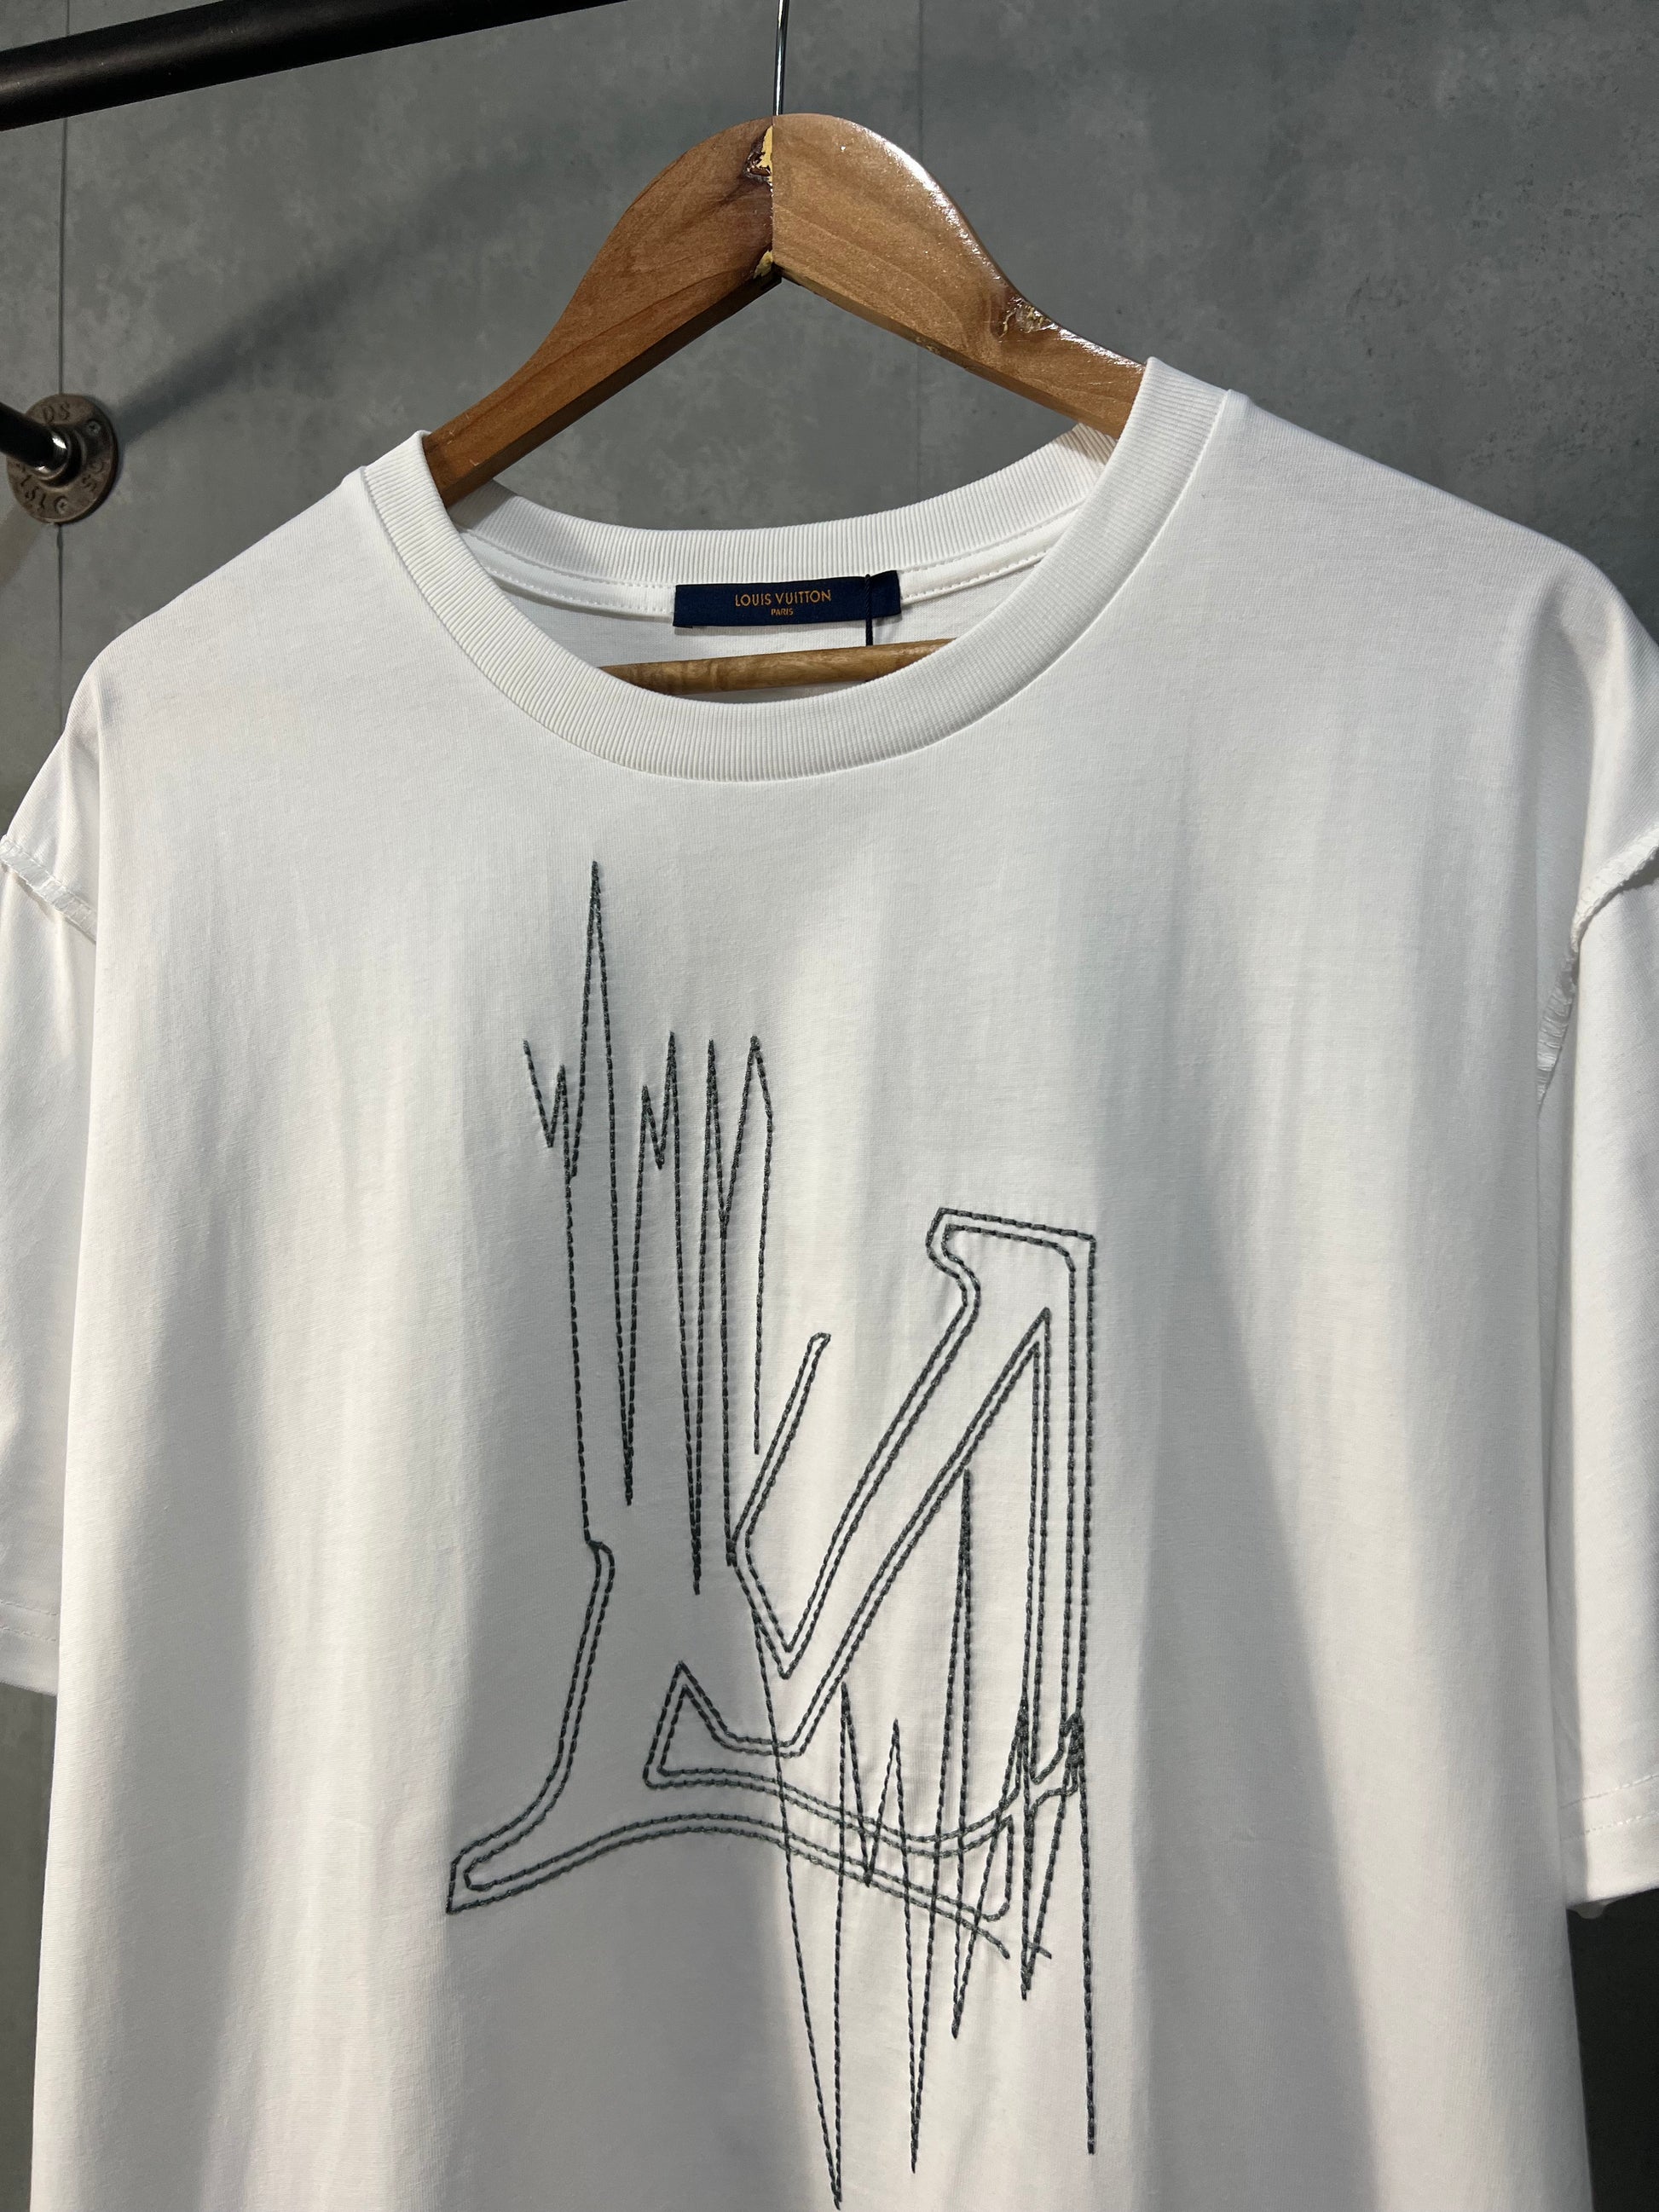 Louis Vuitton Frequency Shirt (White)